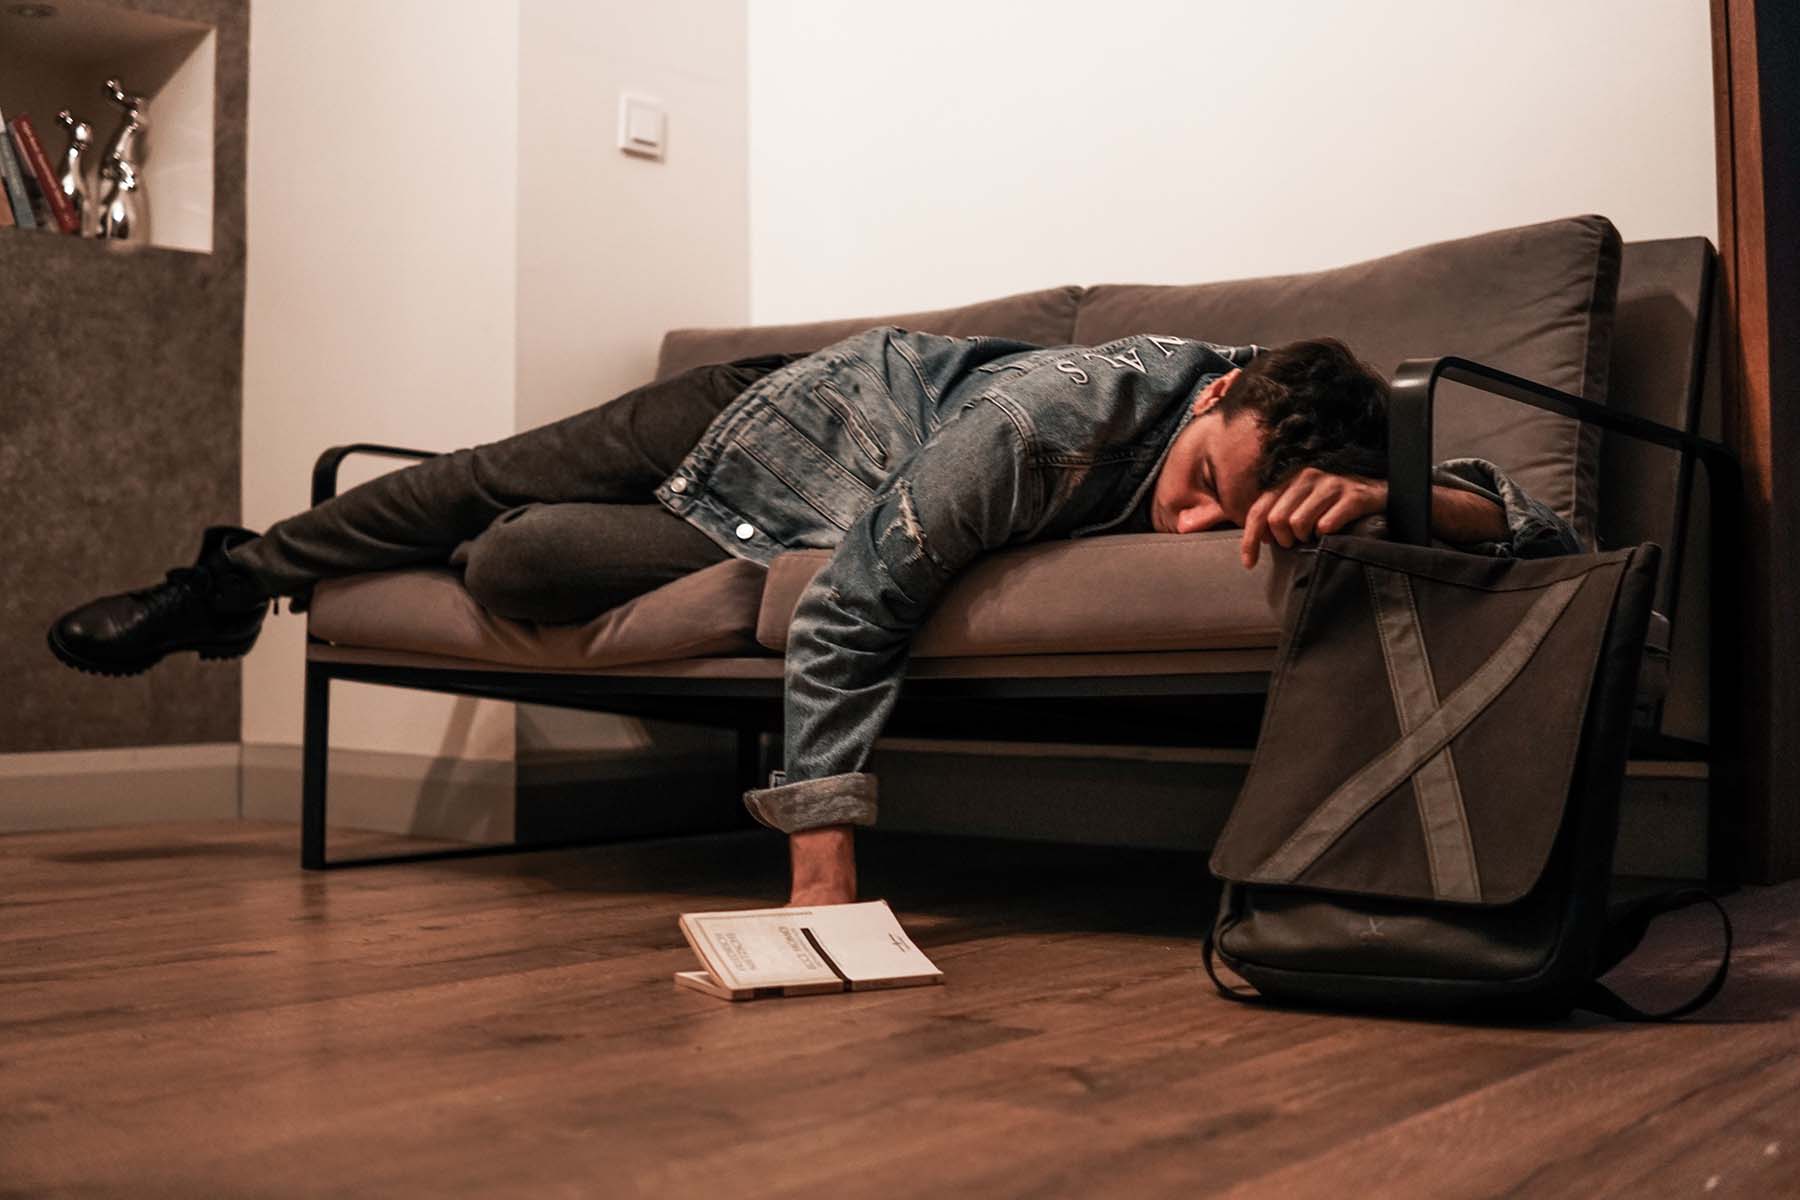 How Does Alcohol Affect sleep?